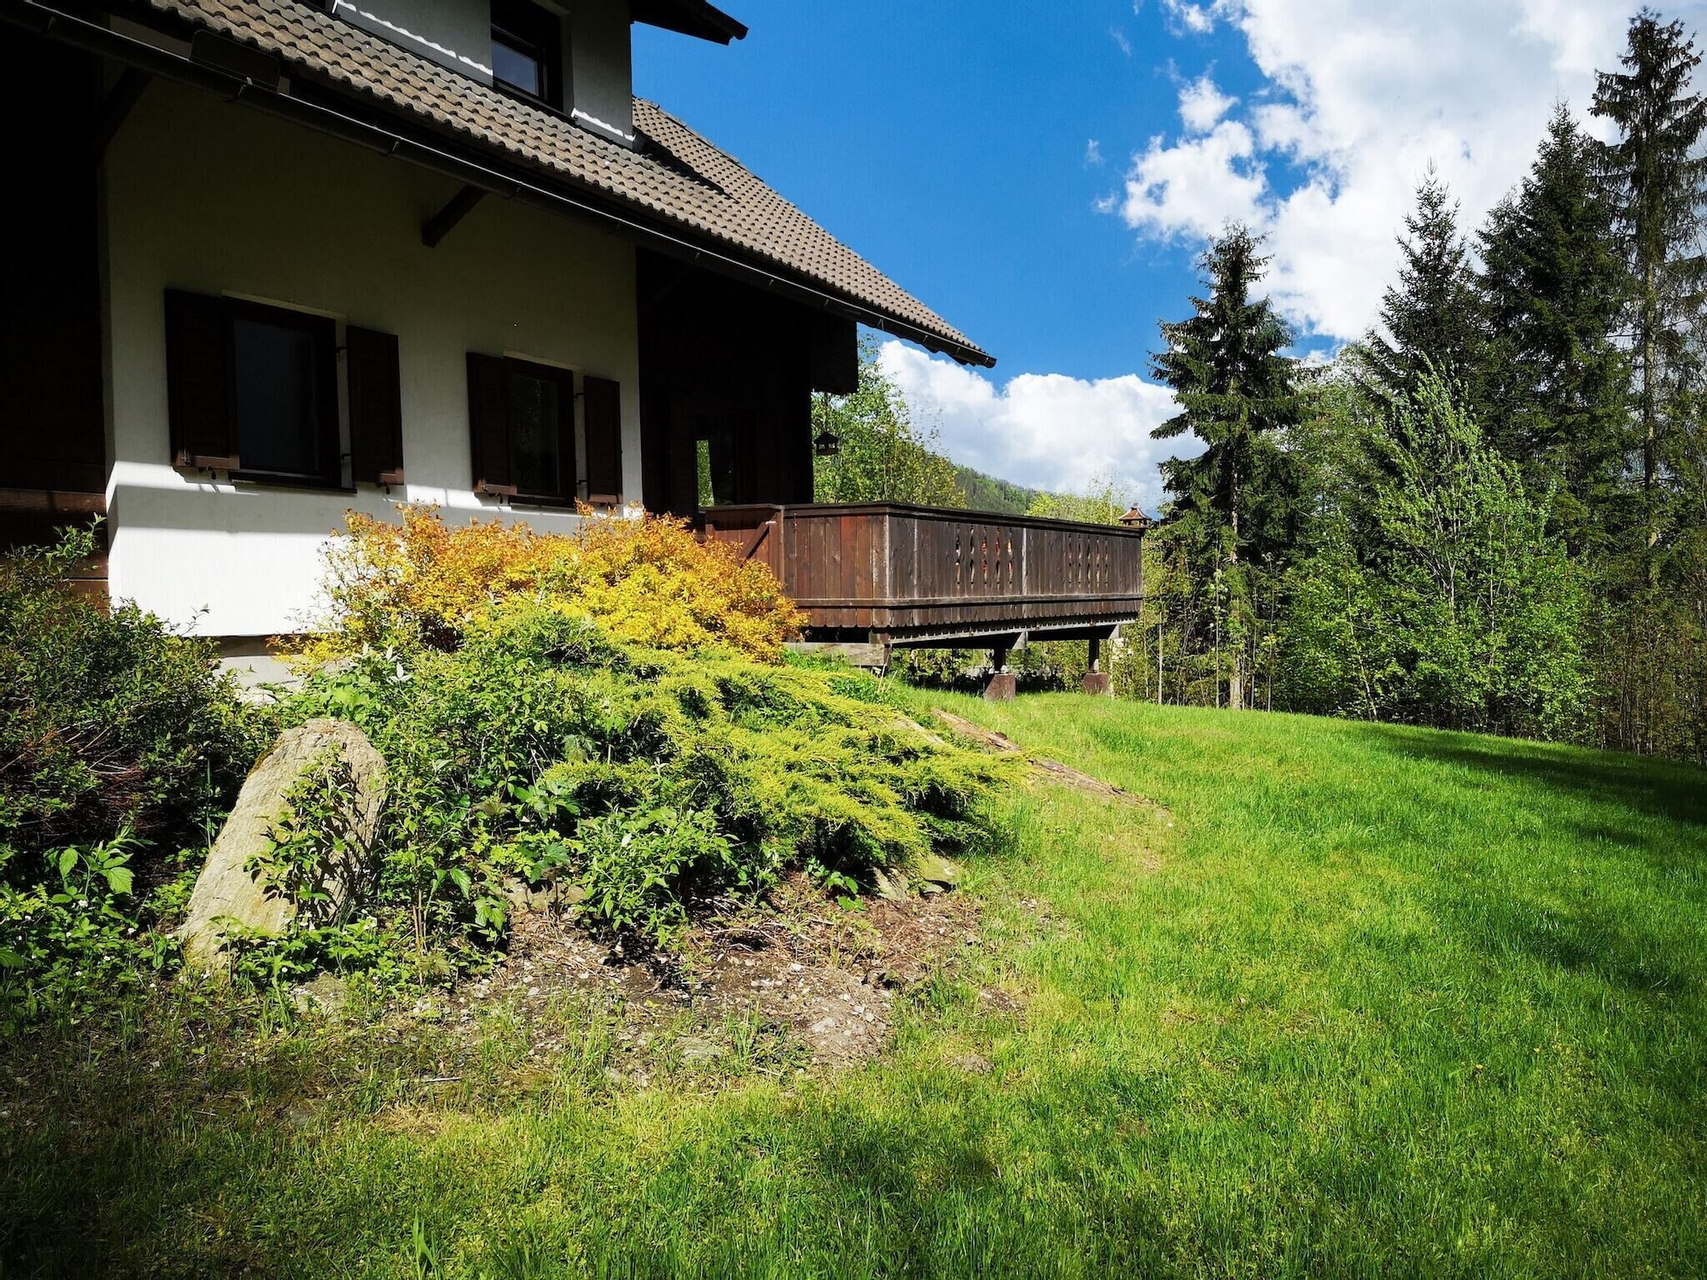 Exterior & Views 1, Very Spacious, Detached Holiday Home in Carinthia near Skiing & Lakes, Feldkirchen